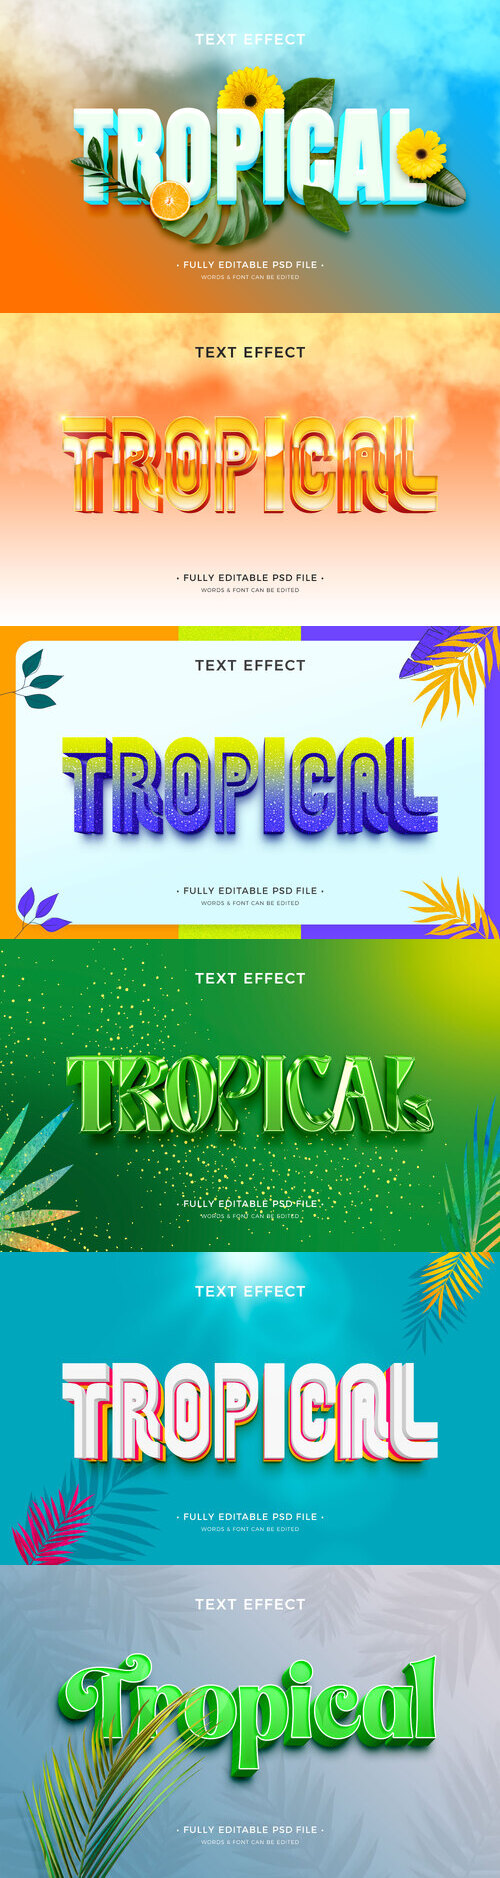 PSD tropical text effect vol 2